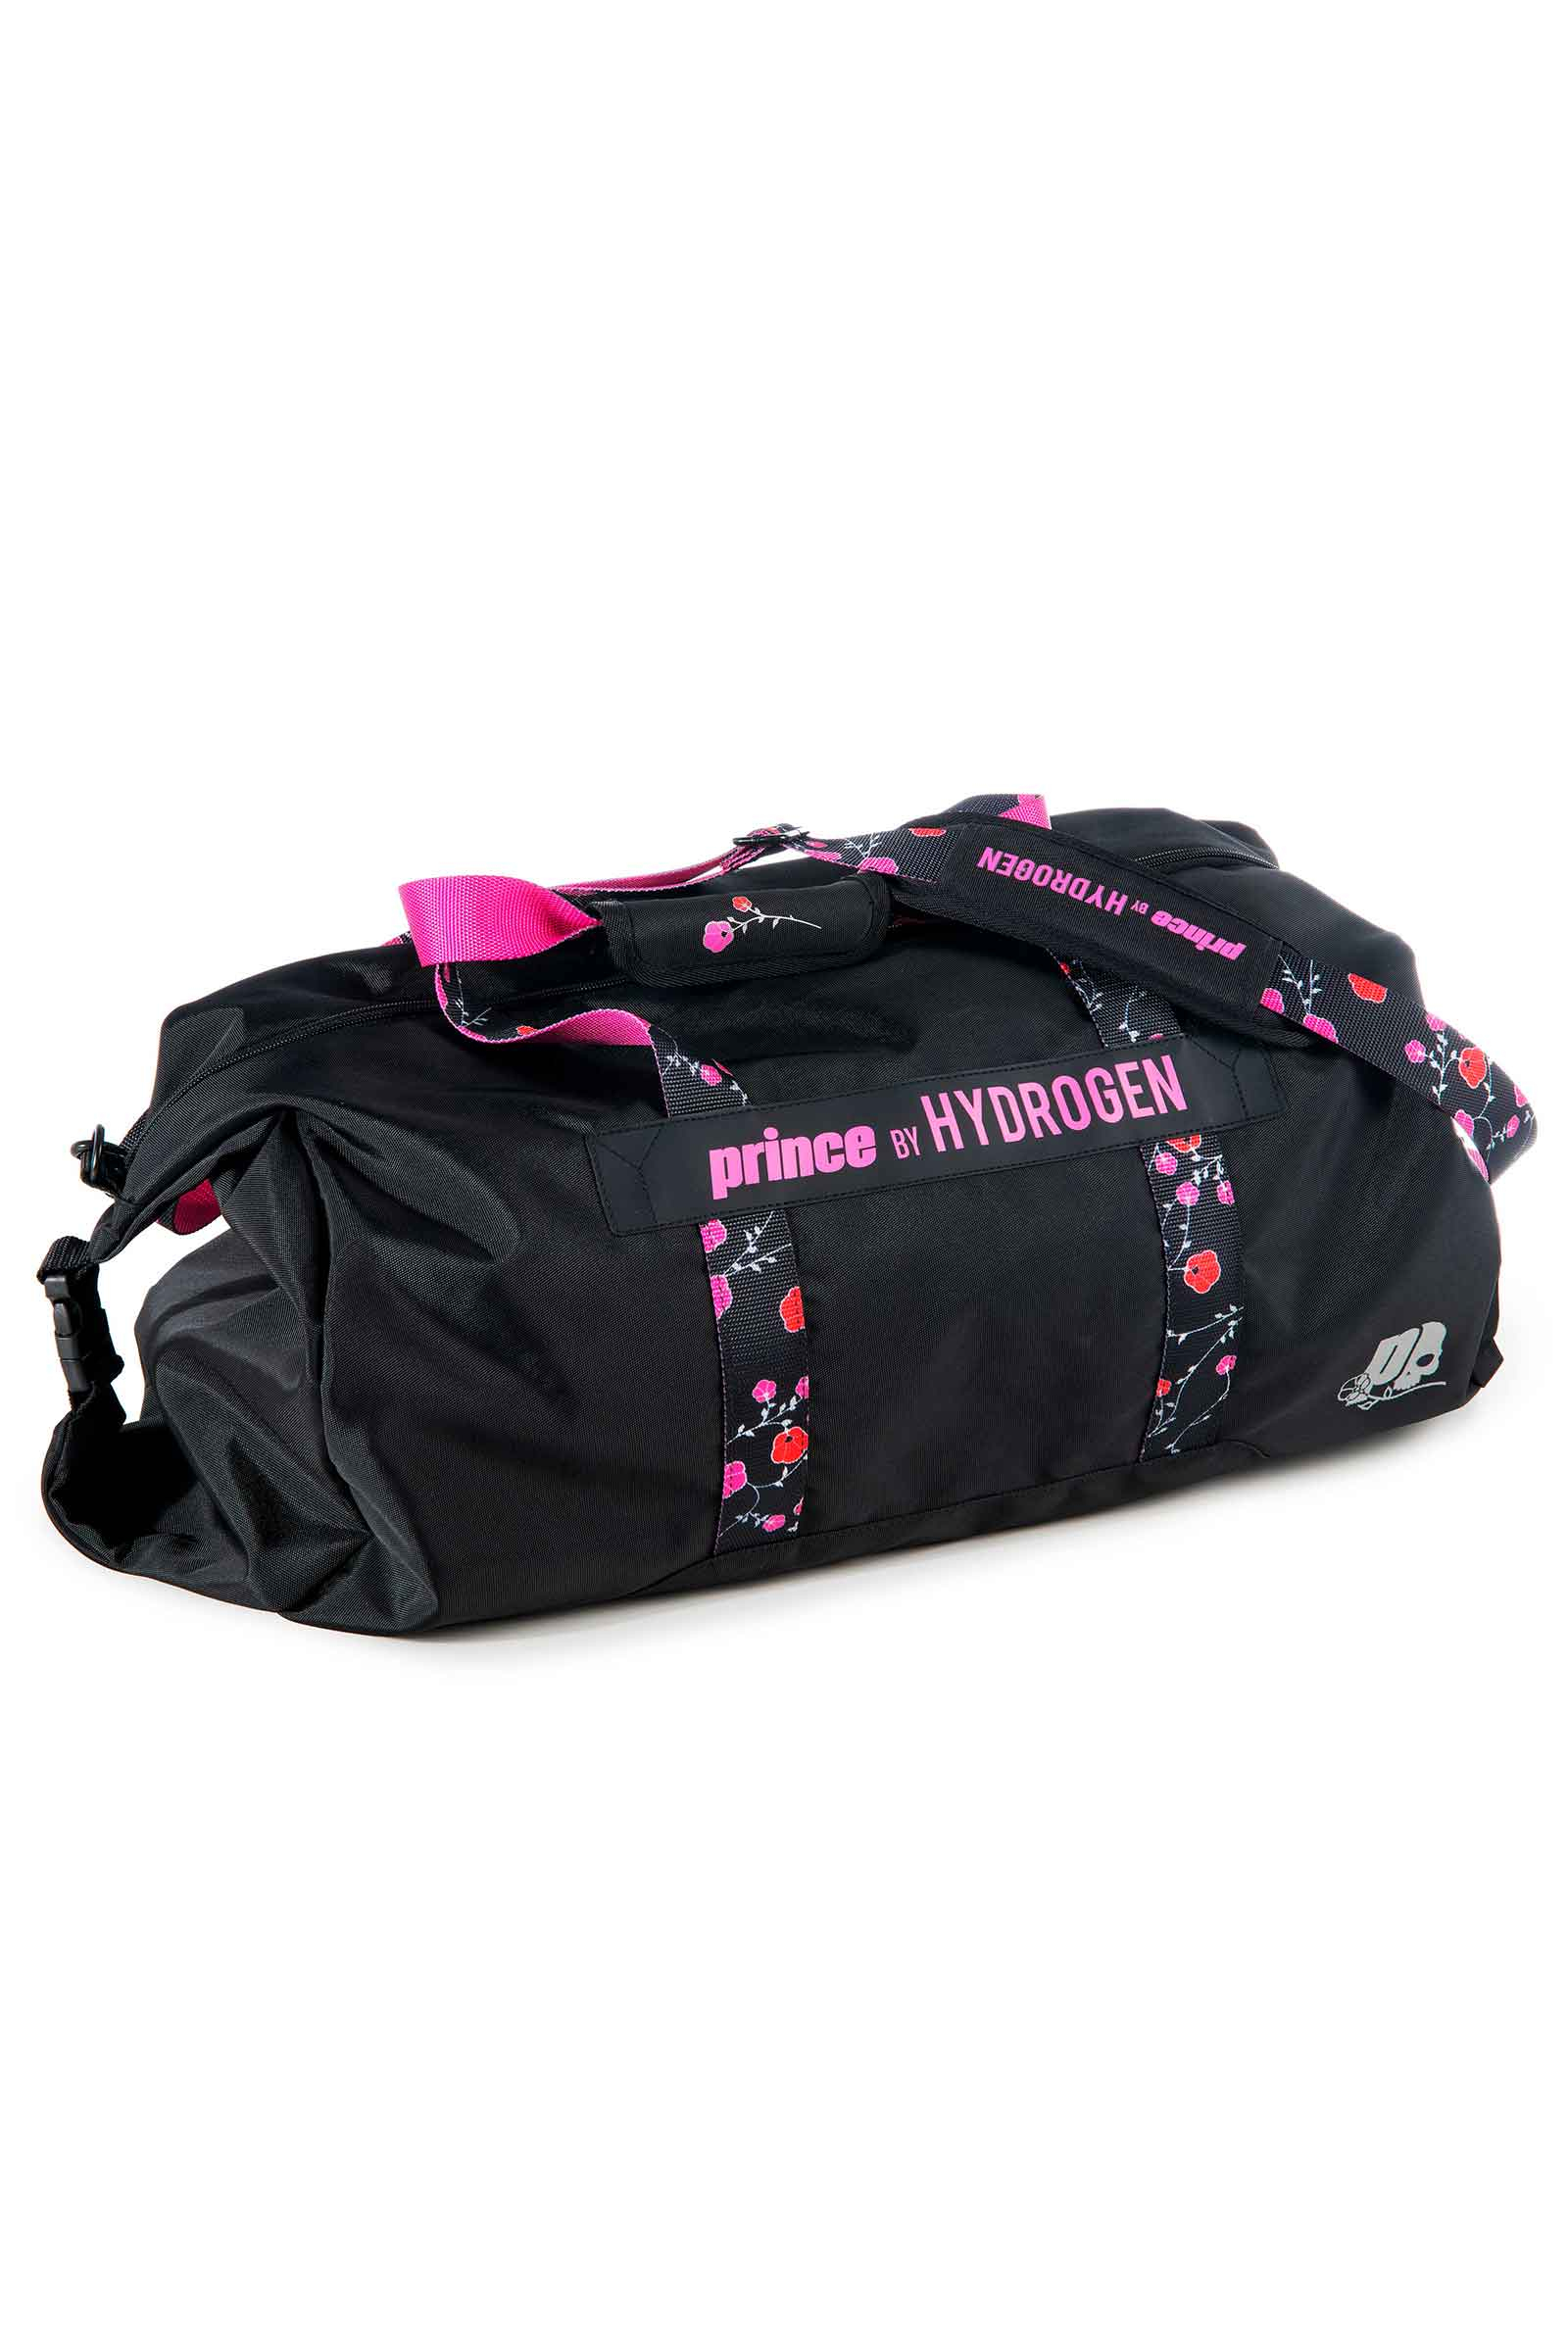 LADY MARY BAG PRINCE BY HYDROGEN - Accessori - Abbigliamento sportivo | Hydrogen